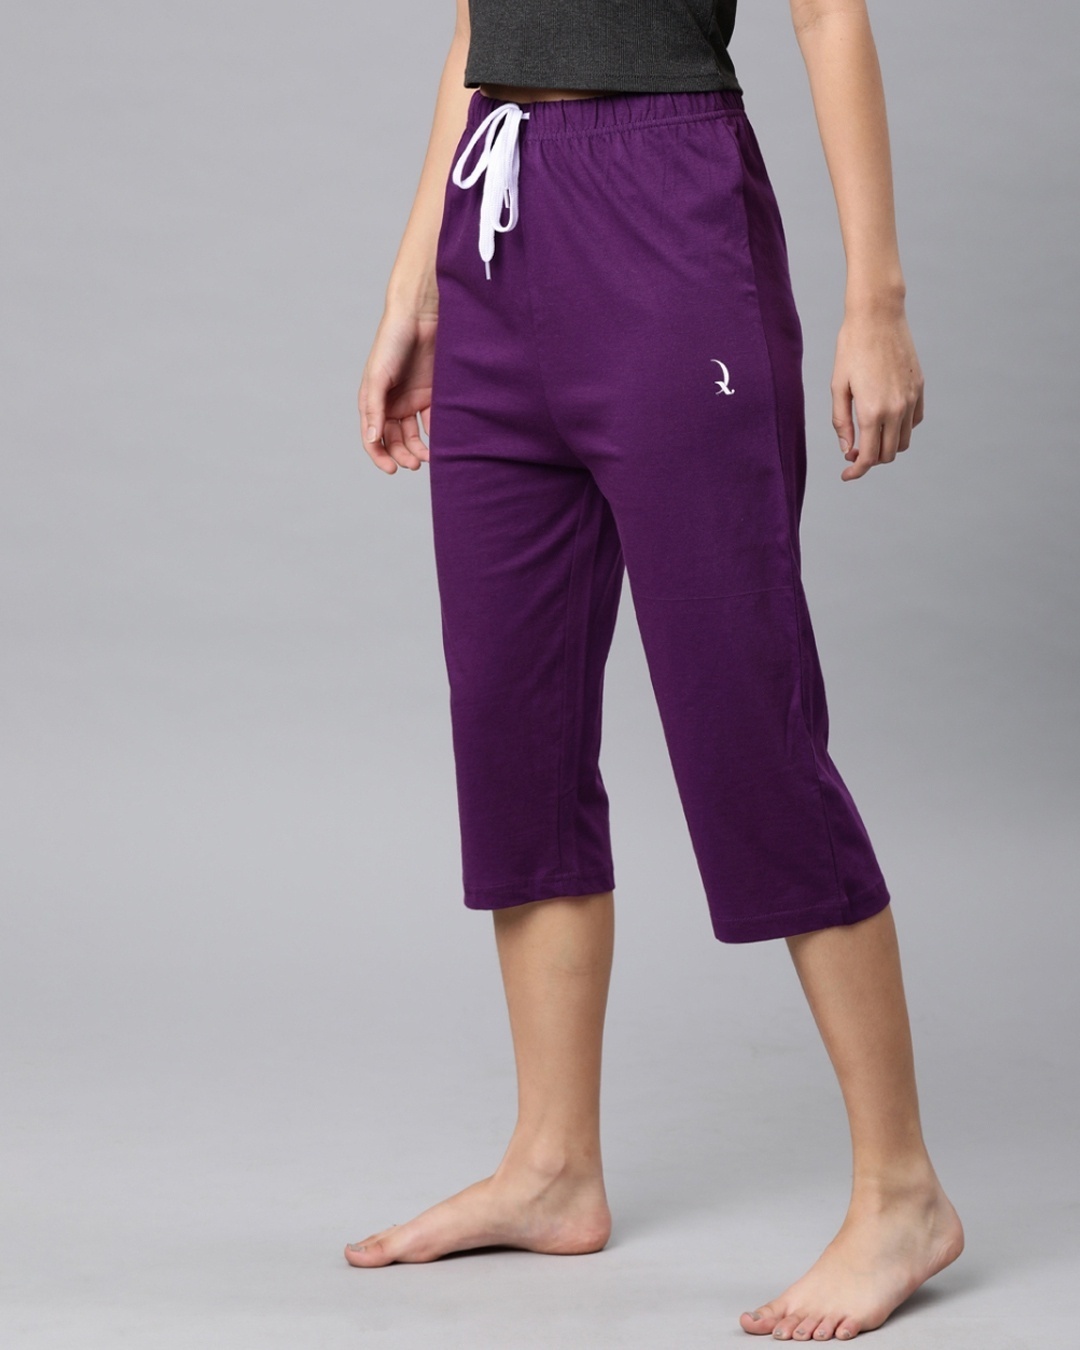 Shop Purple Solid Capri-Design